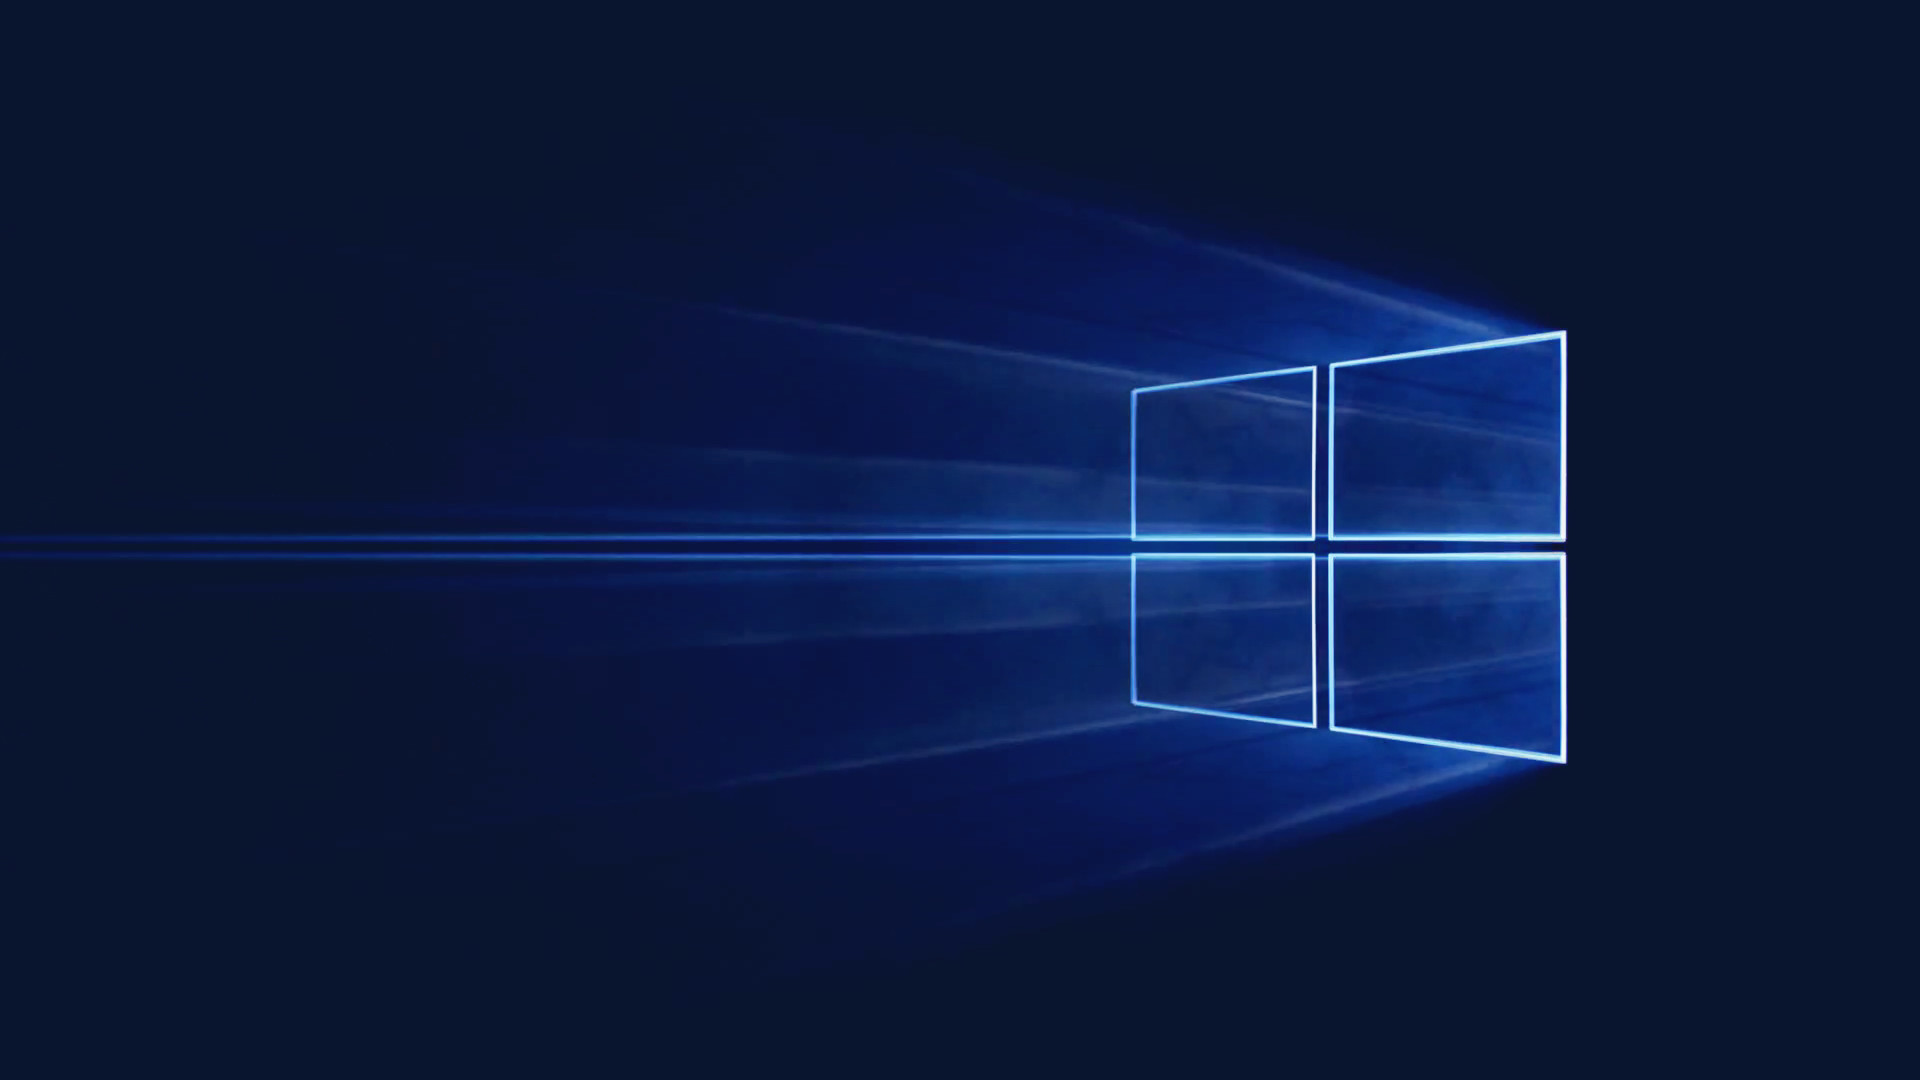 1920x1080 windows 10 desktop blue background imgsnap com